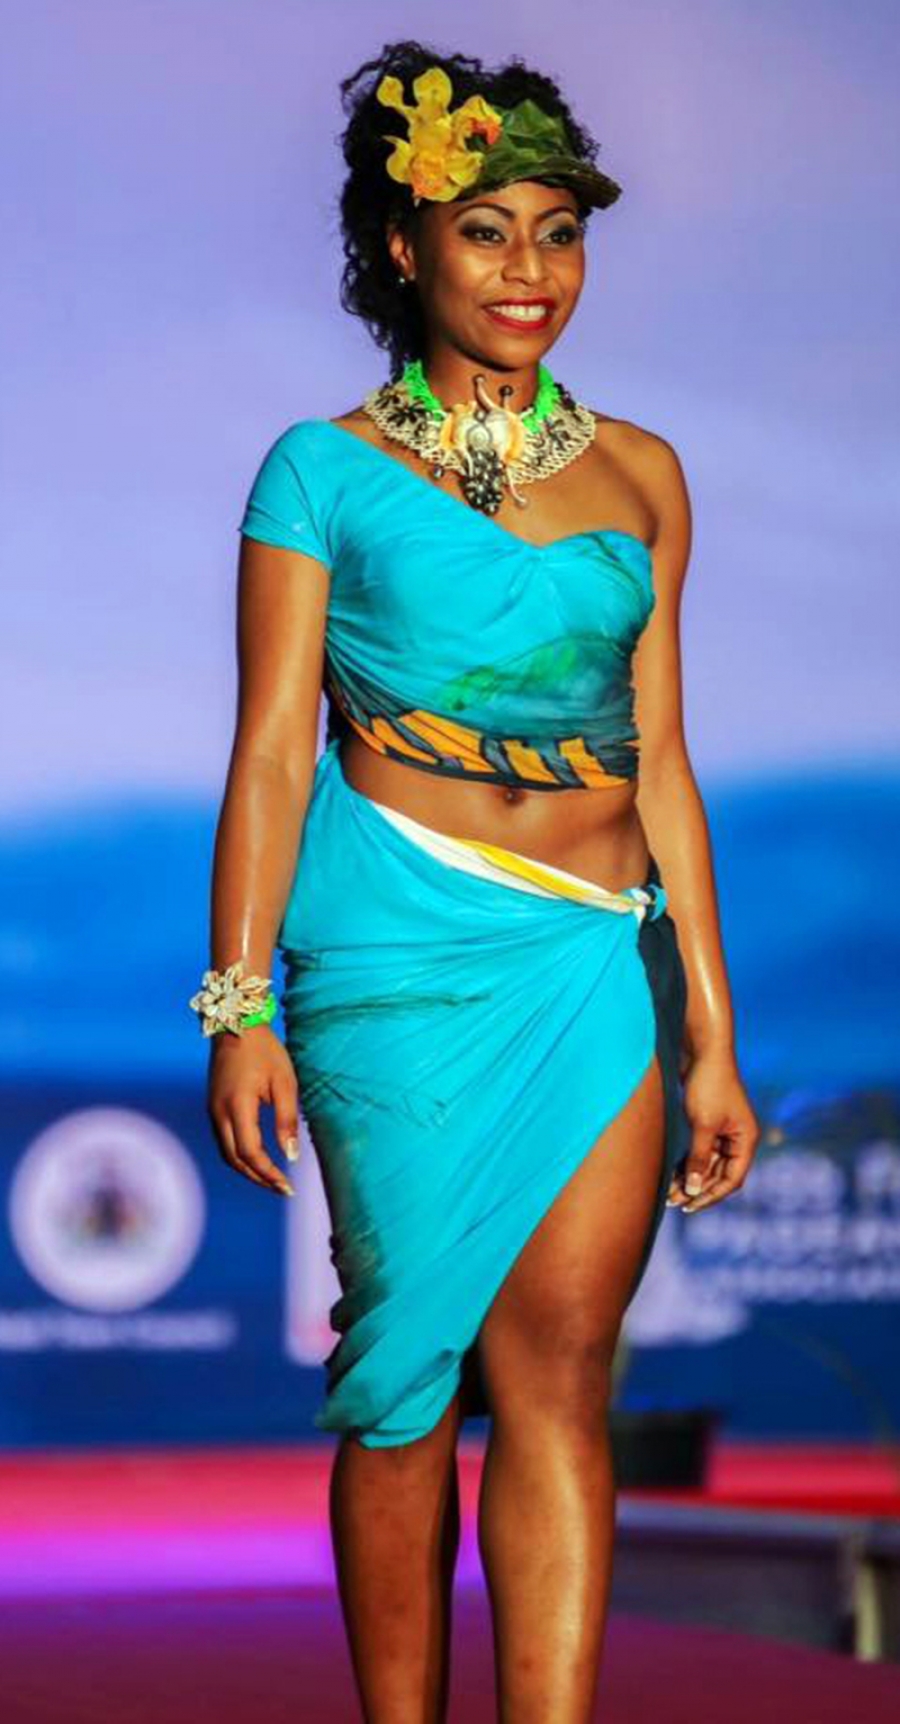 Miss CI third in Fiji event